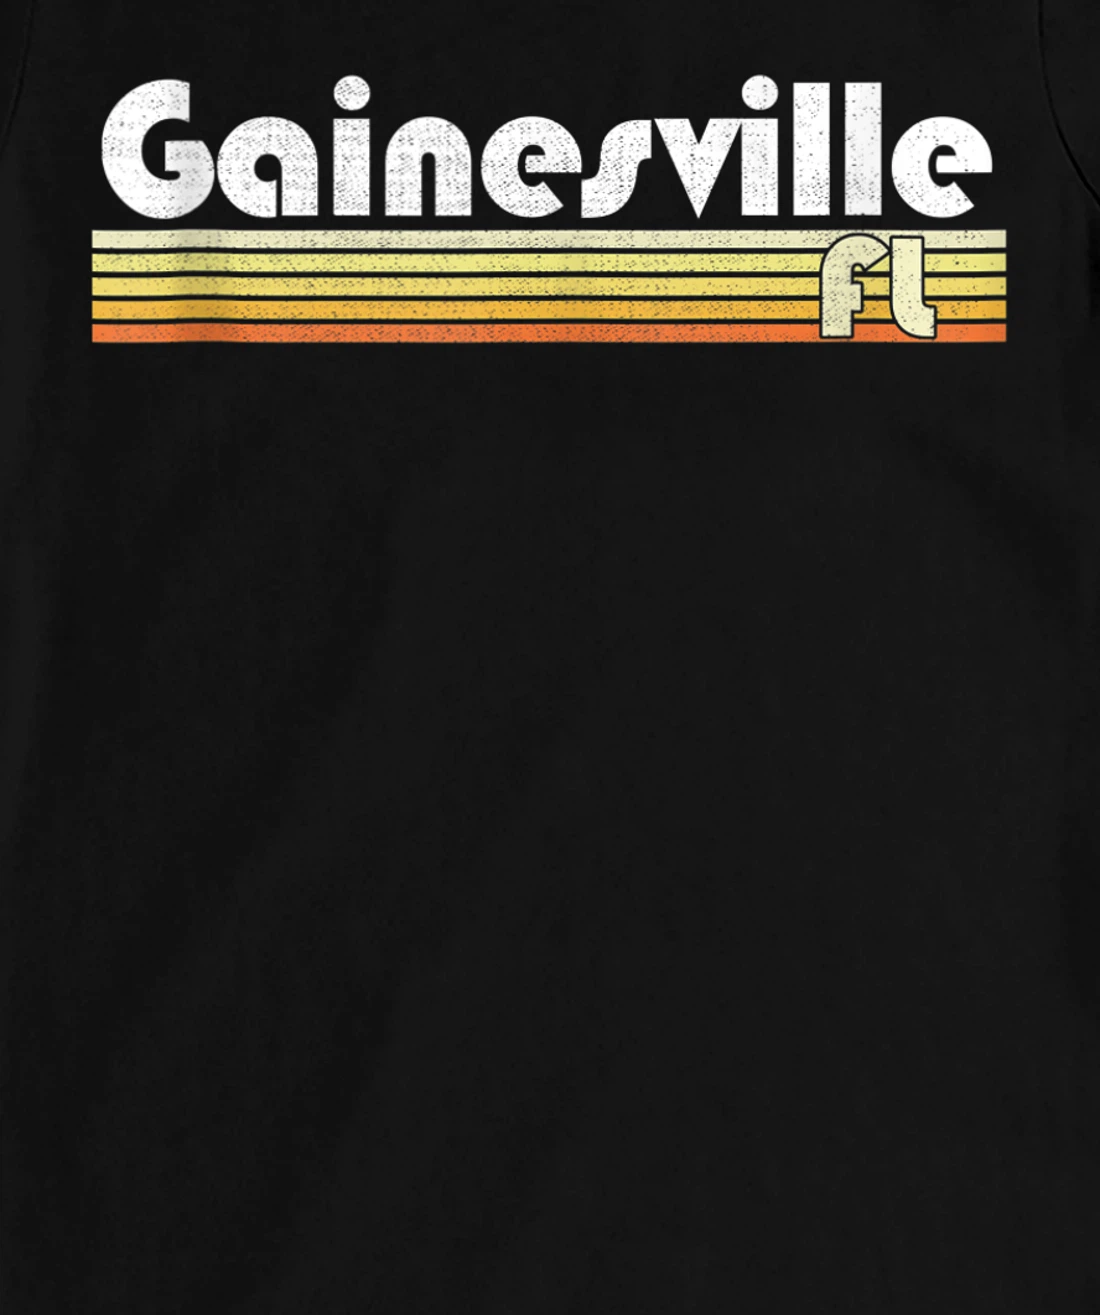 Gainesville FL Shirt 70s 80s Style Gainesville Florida Tshirt On Sale Now!! Retro Womens Mens Tshirts